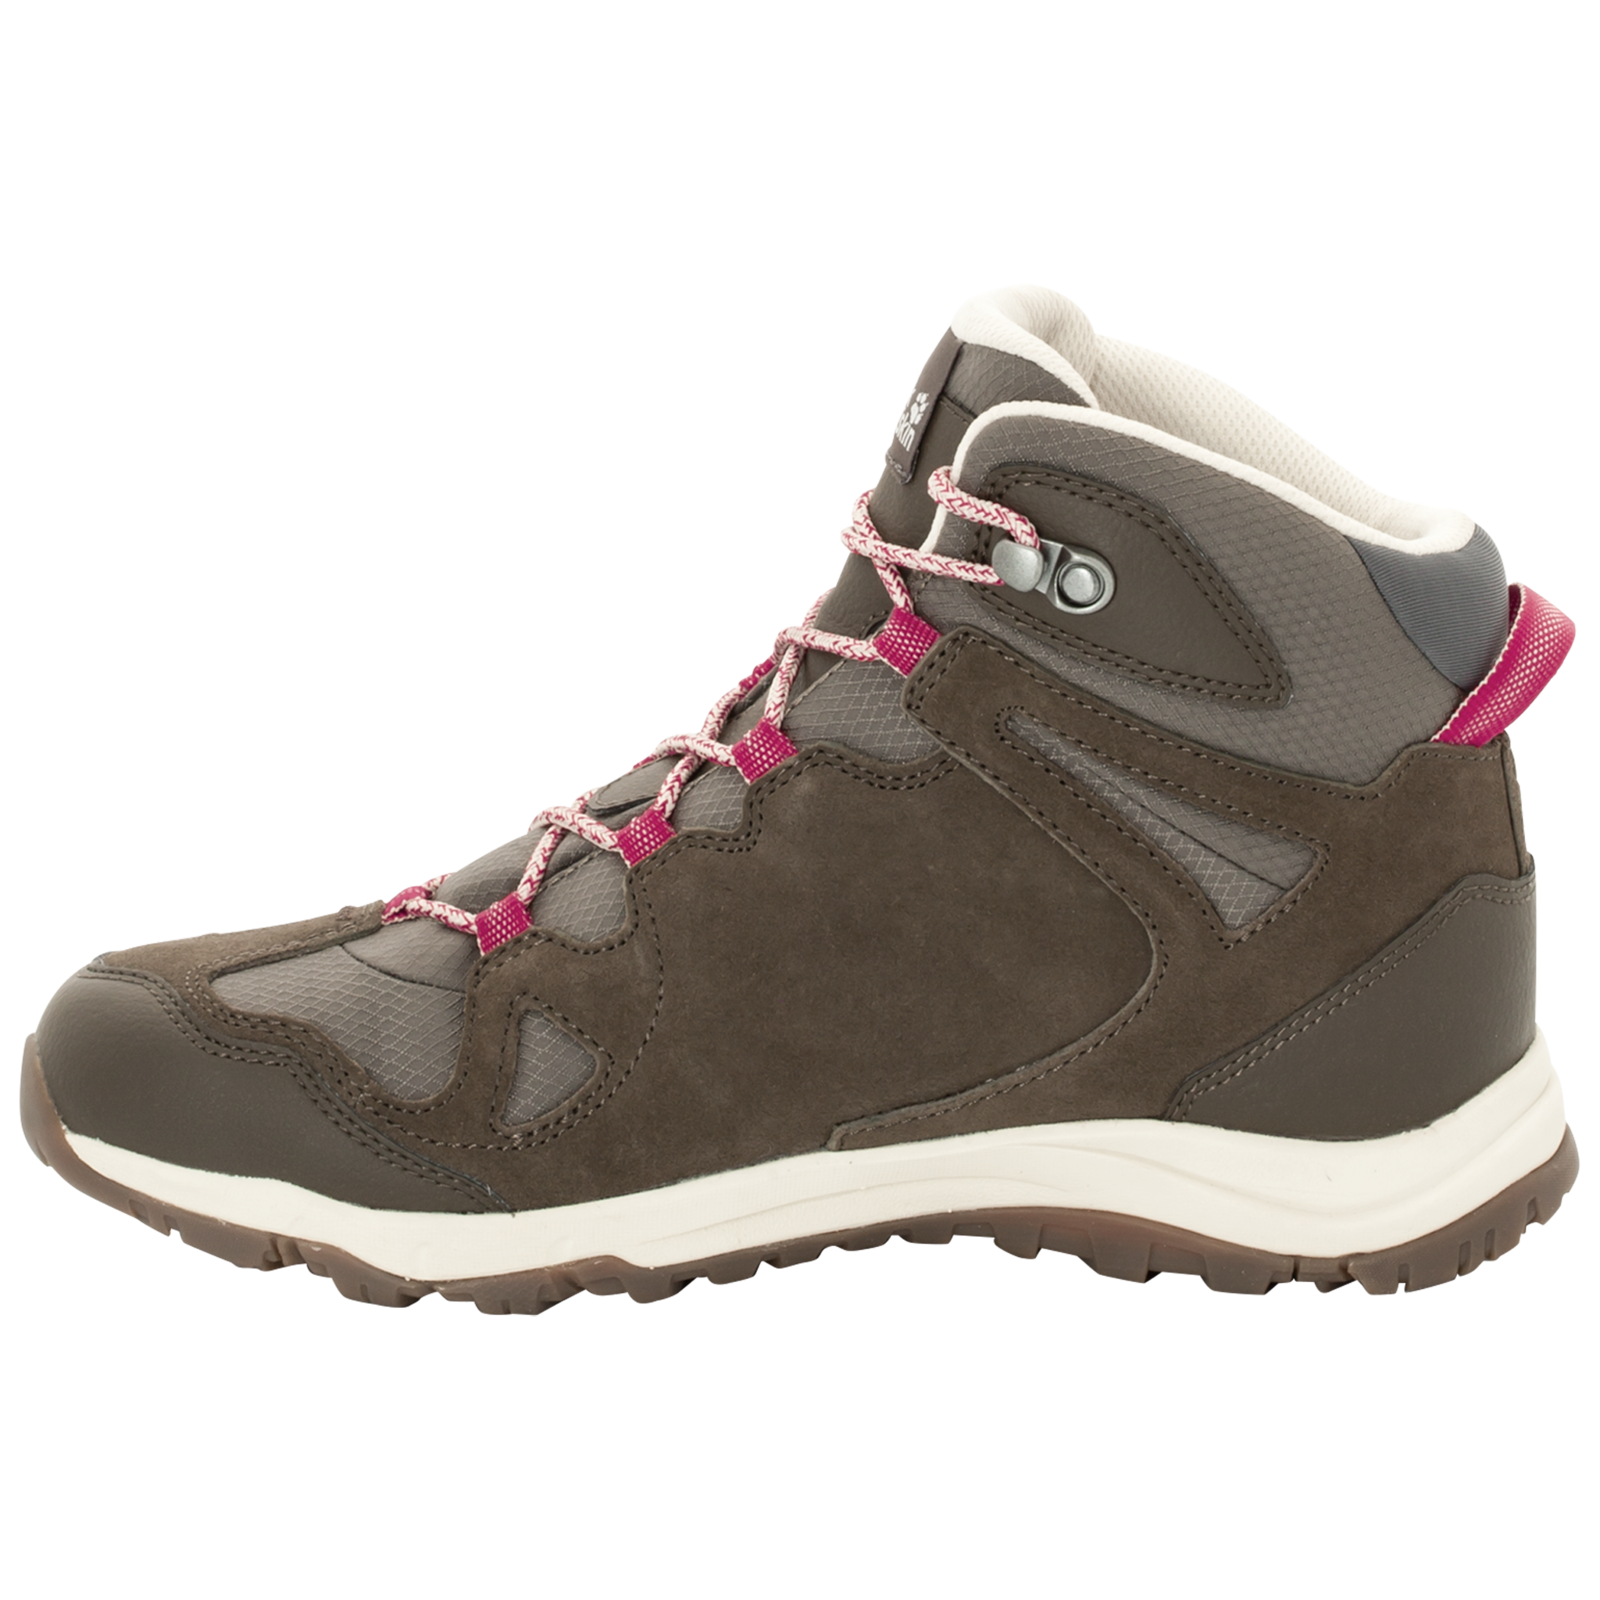 Jack Wolfskin Women's Waterproof Hiking Boots Shoes Rocksand Texapore ...